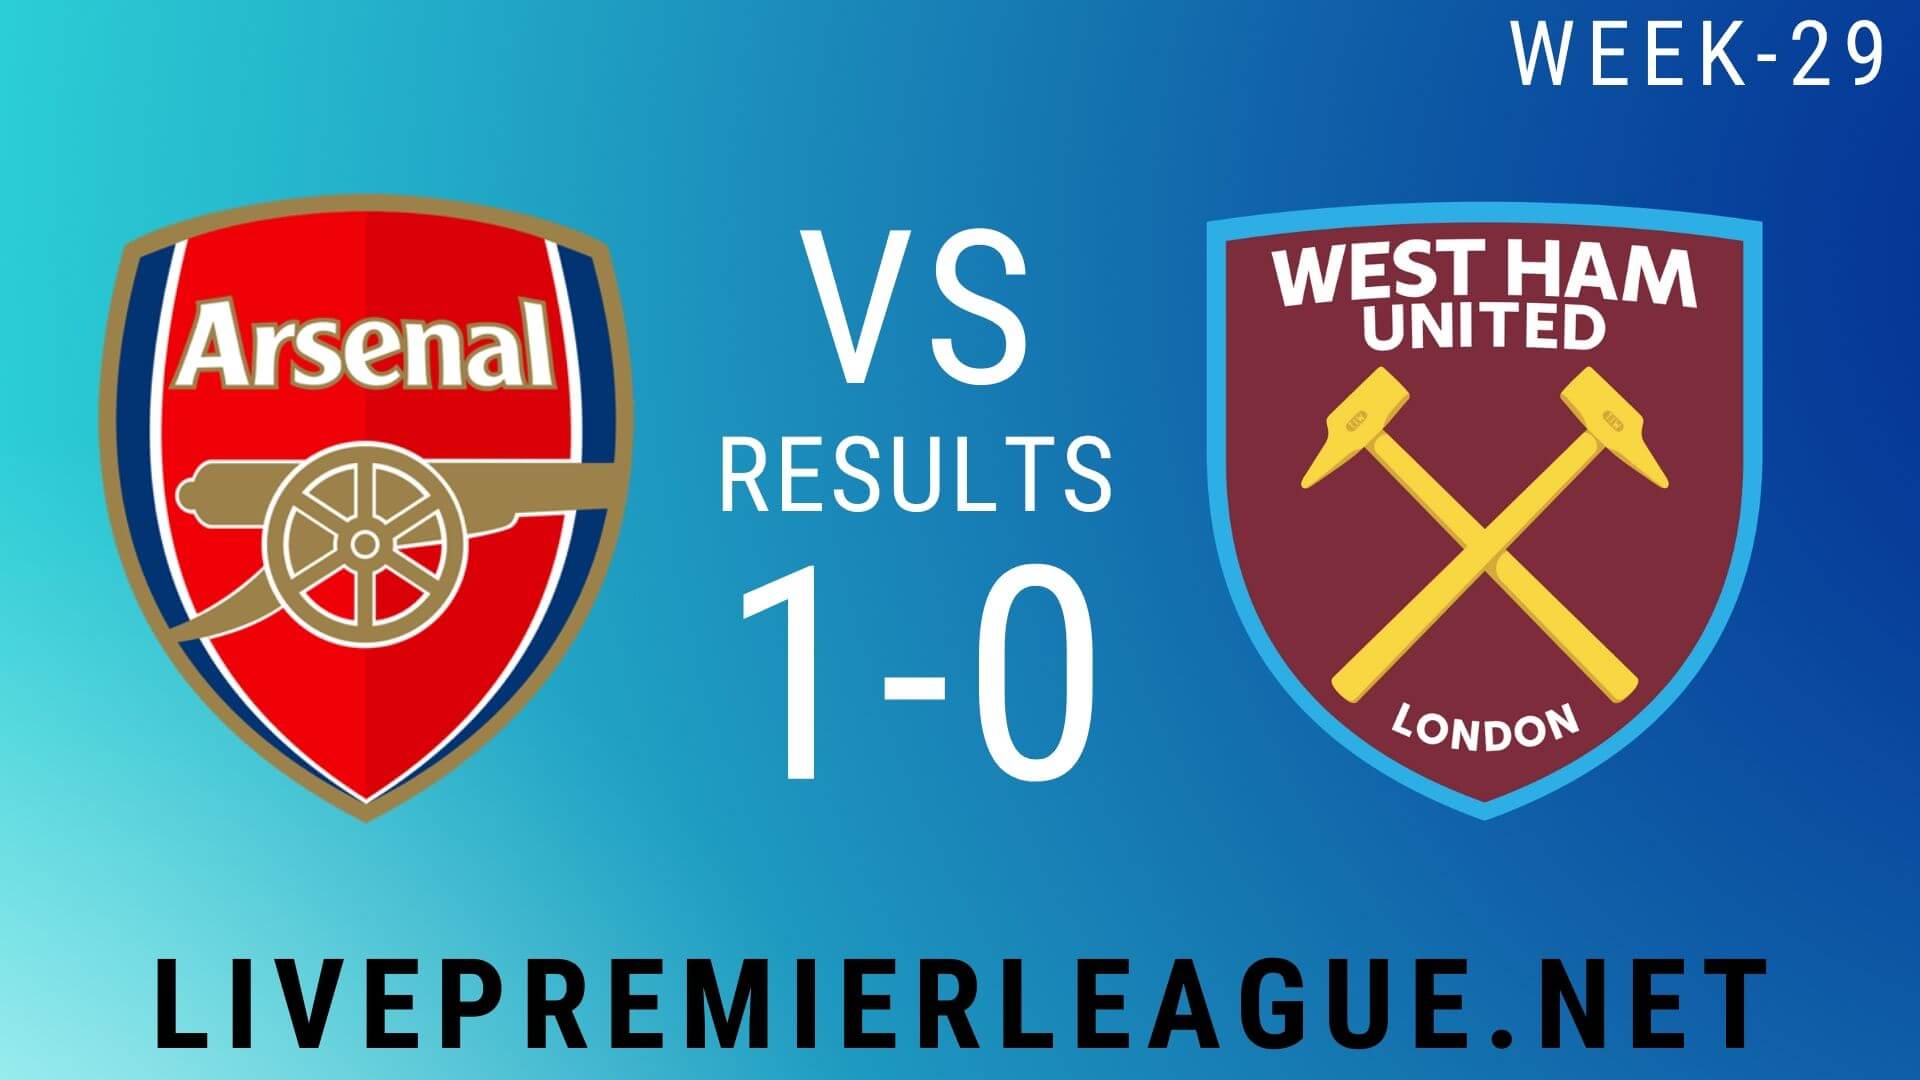 Arsenal Vs West Ham United | Week 29 Result 2020